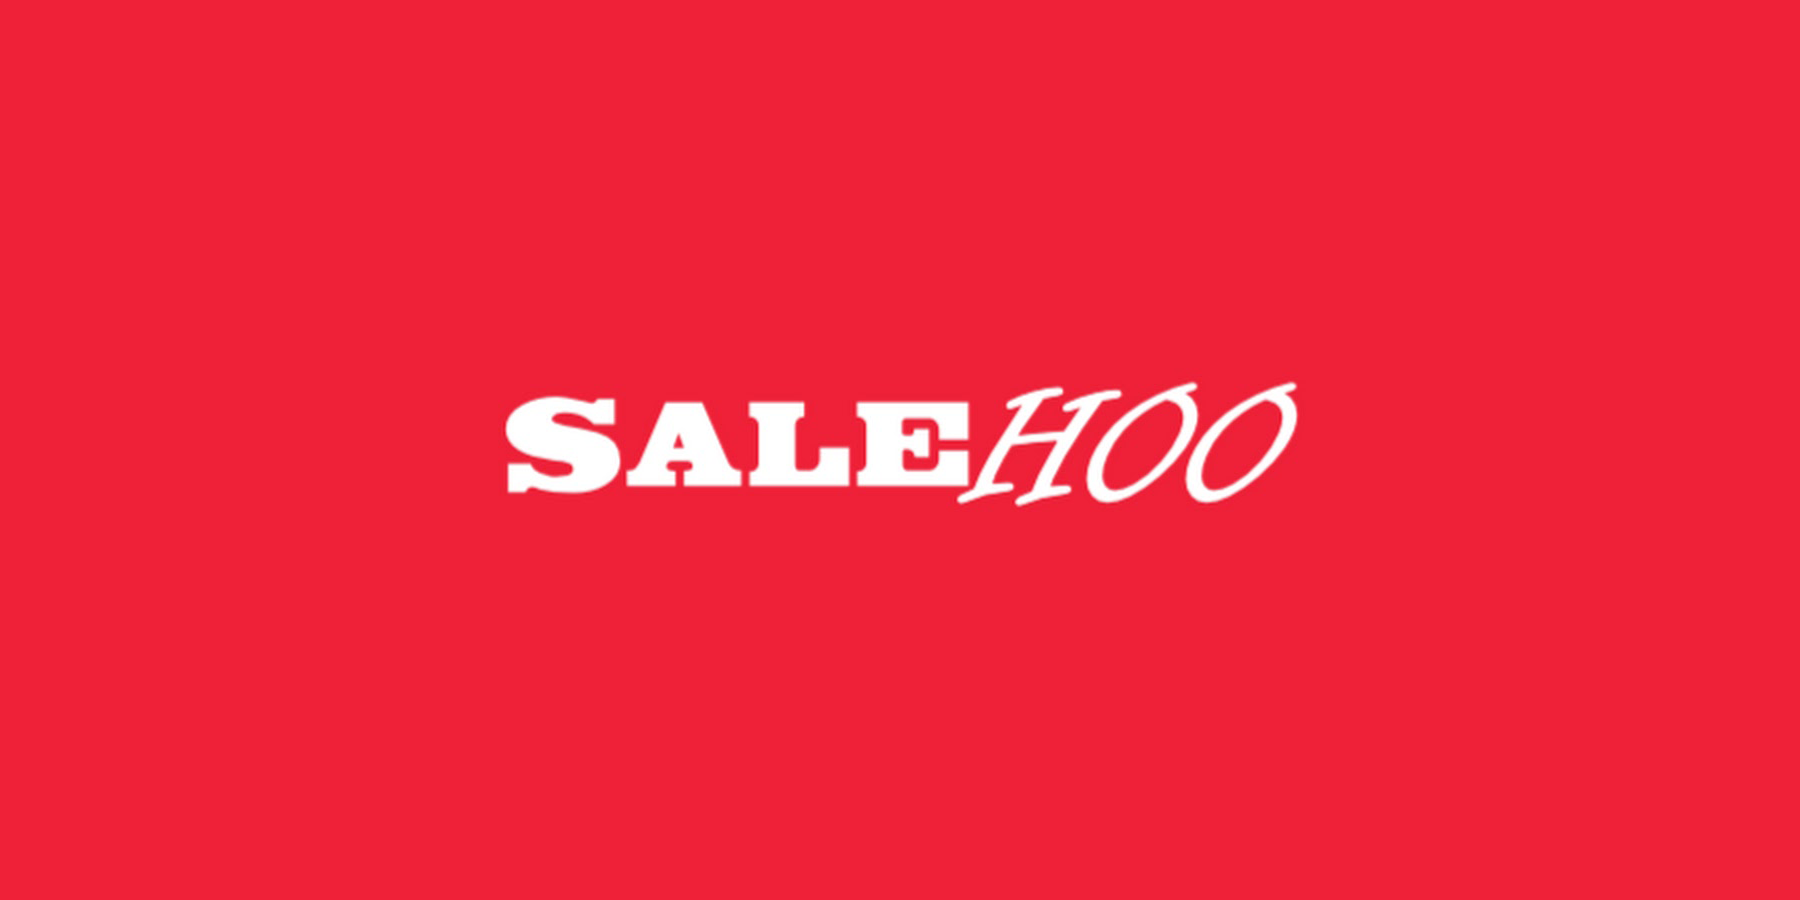 2019 Salehoo review - legit or scam